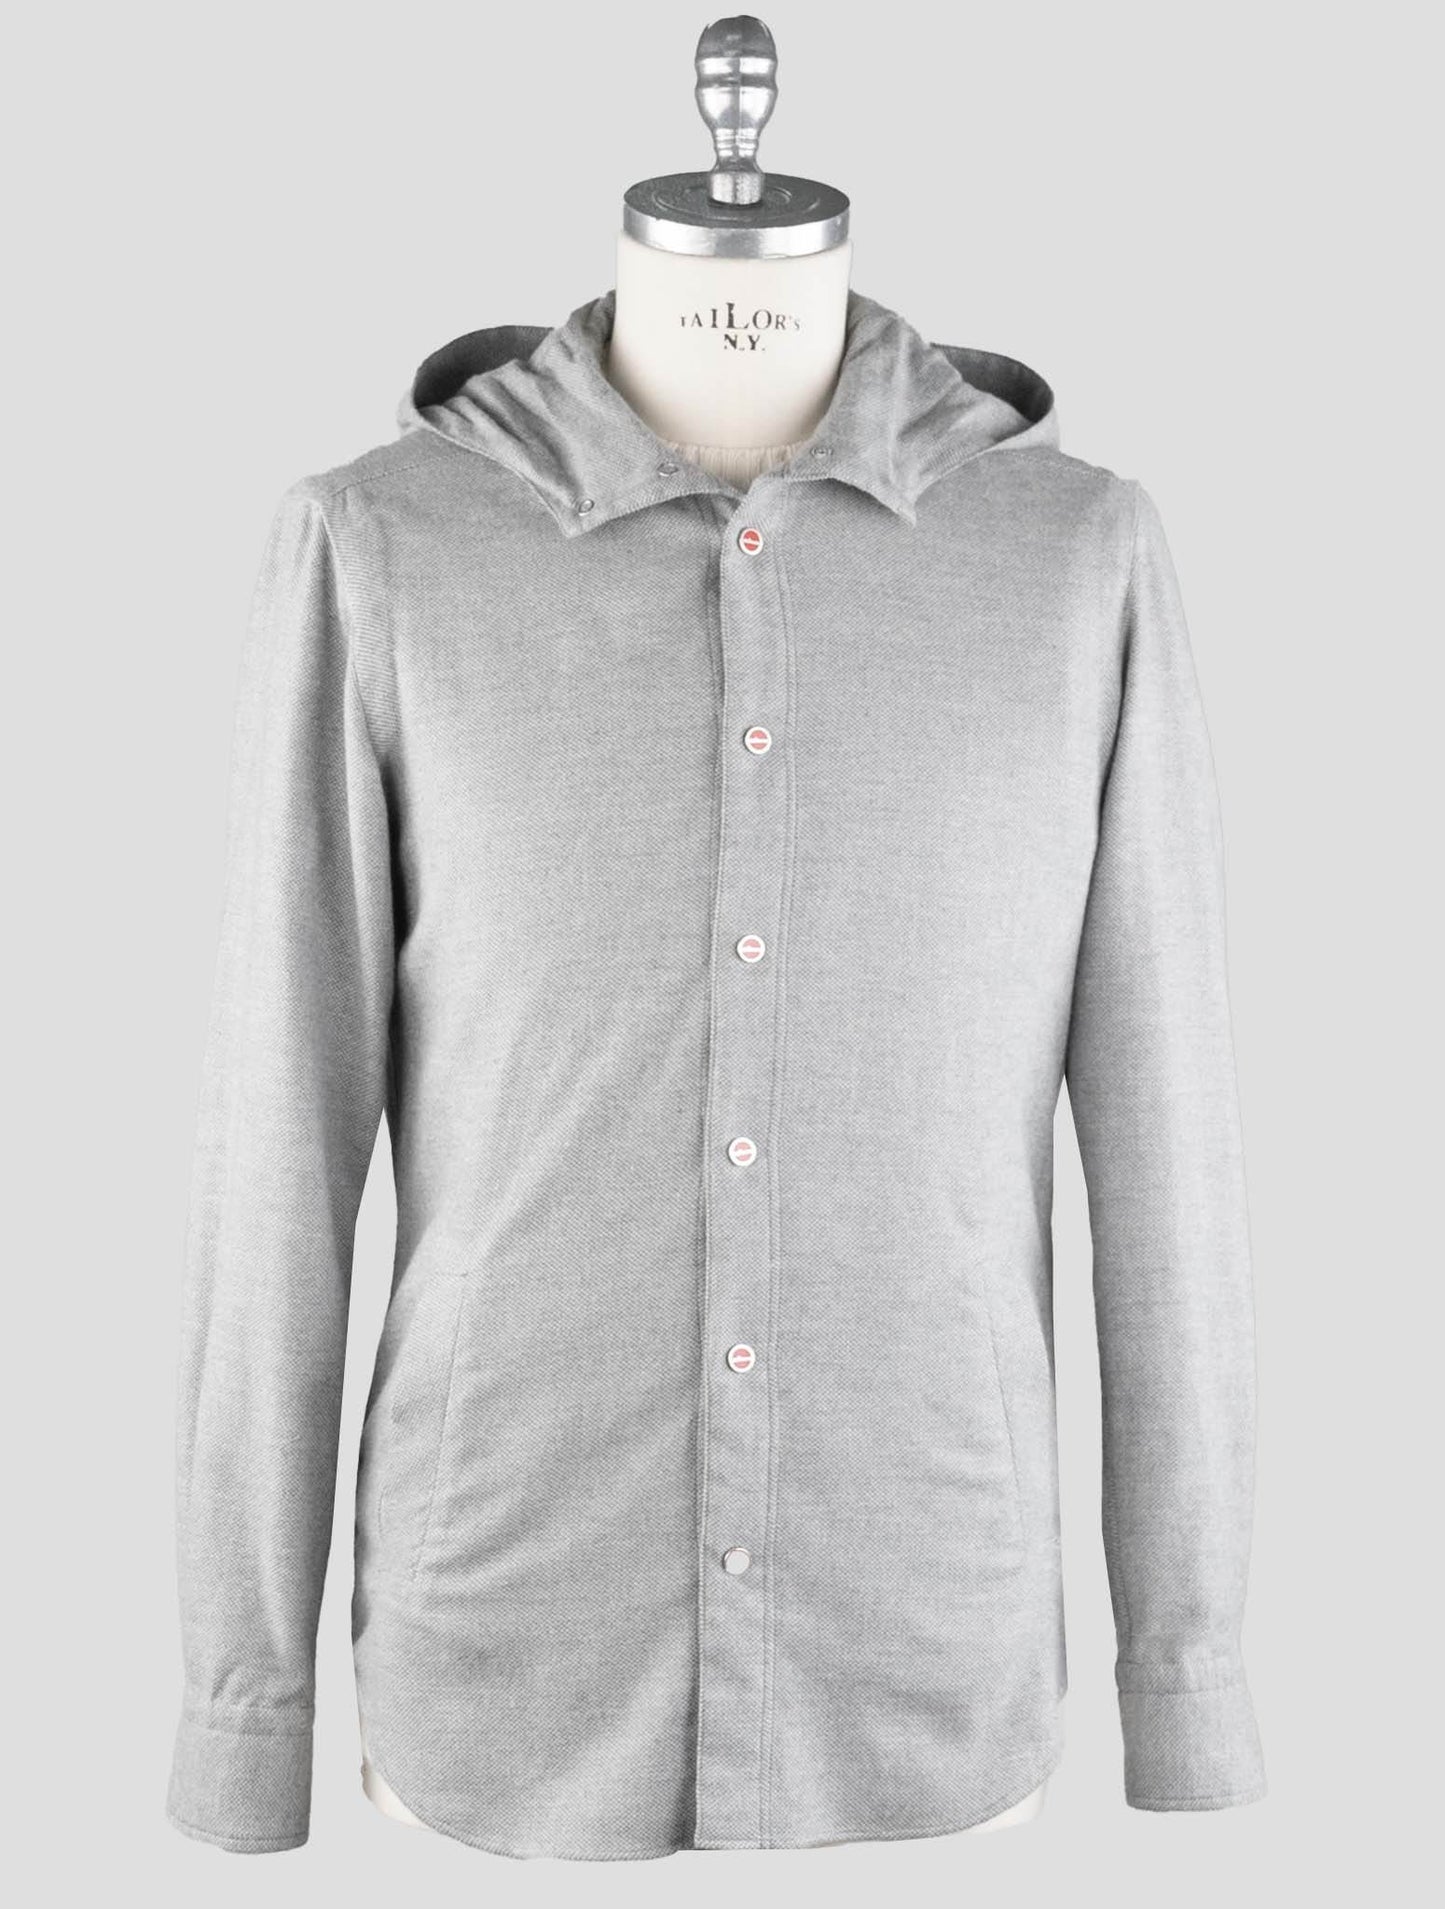 Kiton Gray Cotton Shirt Mariano